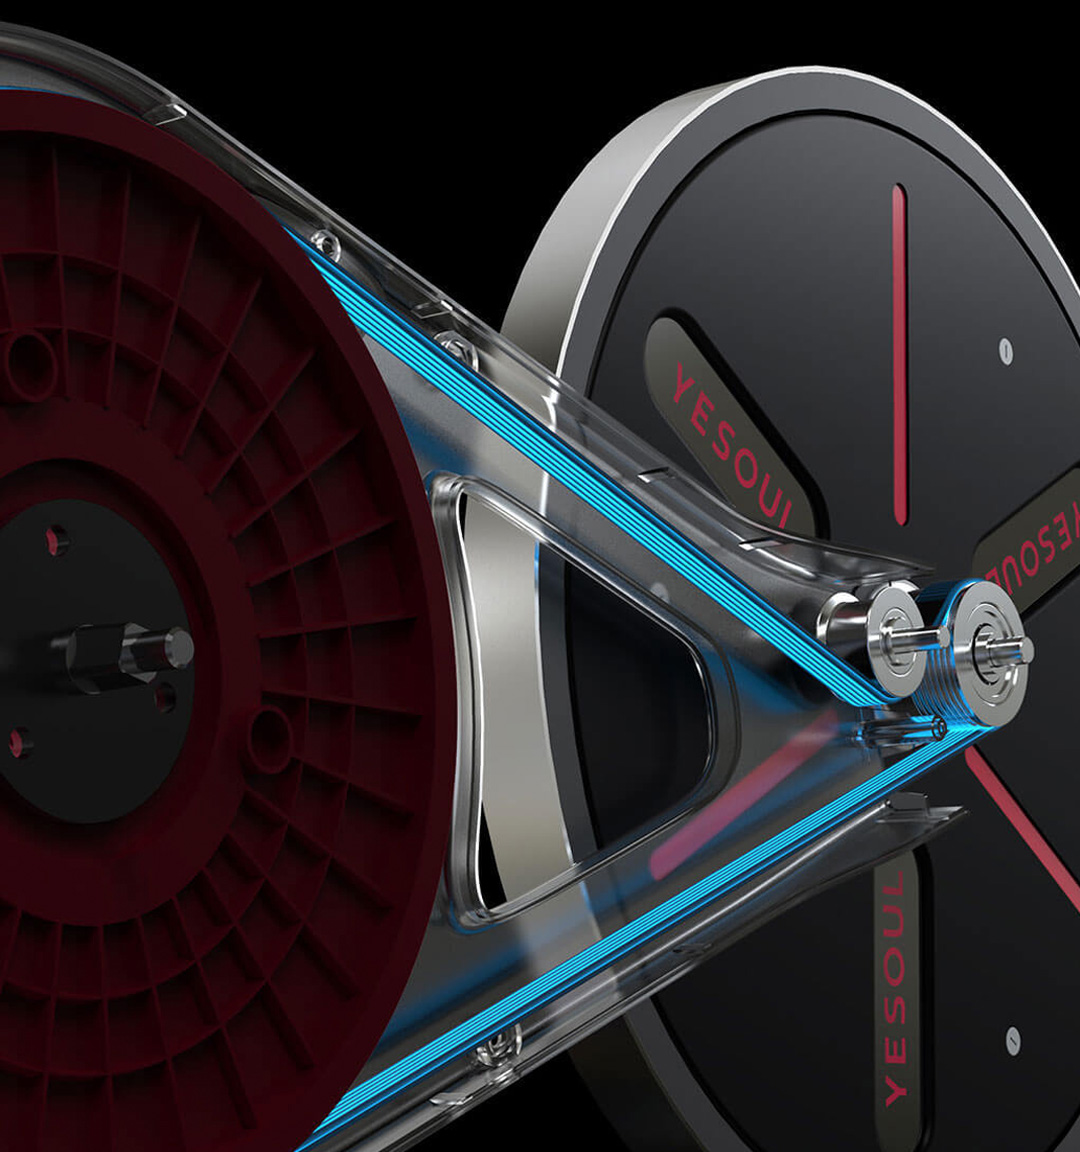 Yesoul bike. Велотренажёр Xiaomi Yesoul. Yesoul Smart Spinning Bike. Велотренажер Xiaomi Yesoul s3 белый. Вертикальный велотренажер Yesoul Smart Spinning Bike s3 Pro, черный.